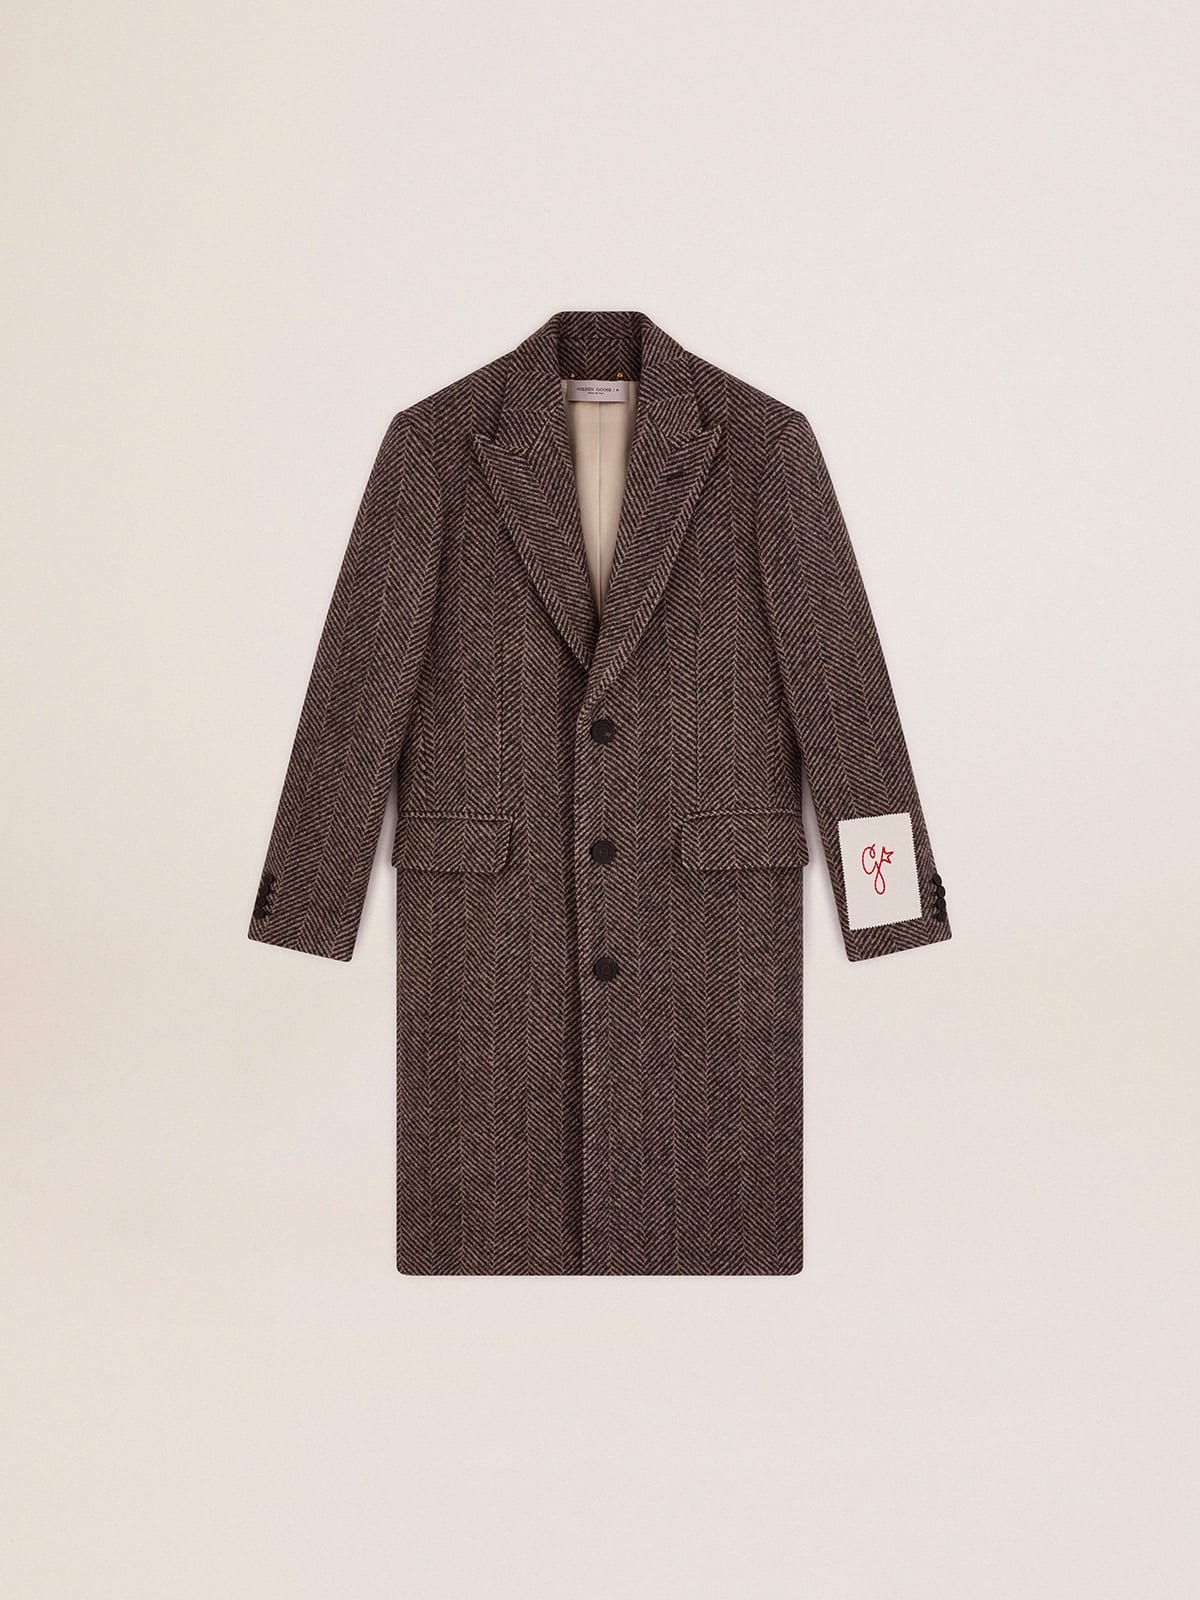 Single-breasted coat in wool with herringbone weave in beige and gray